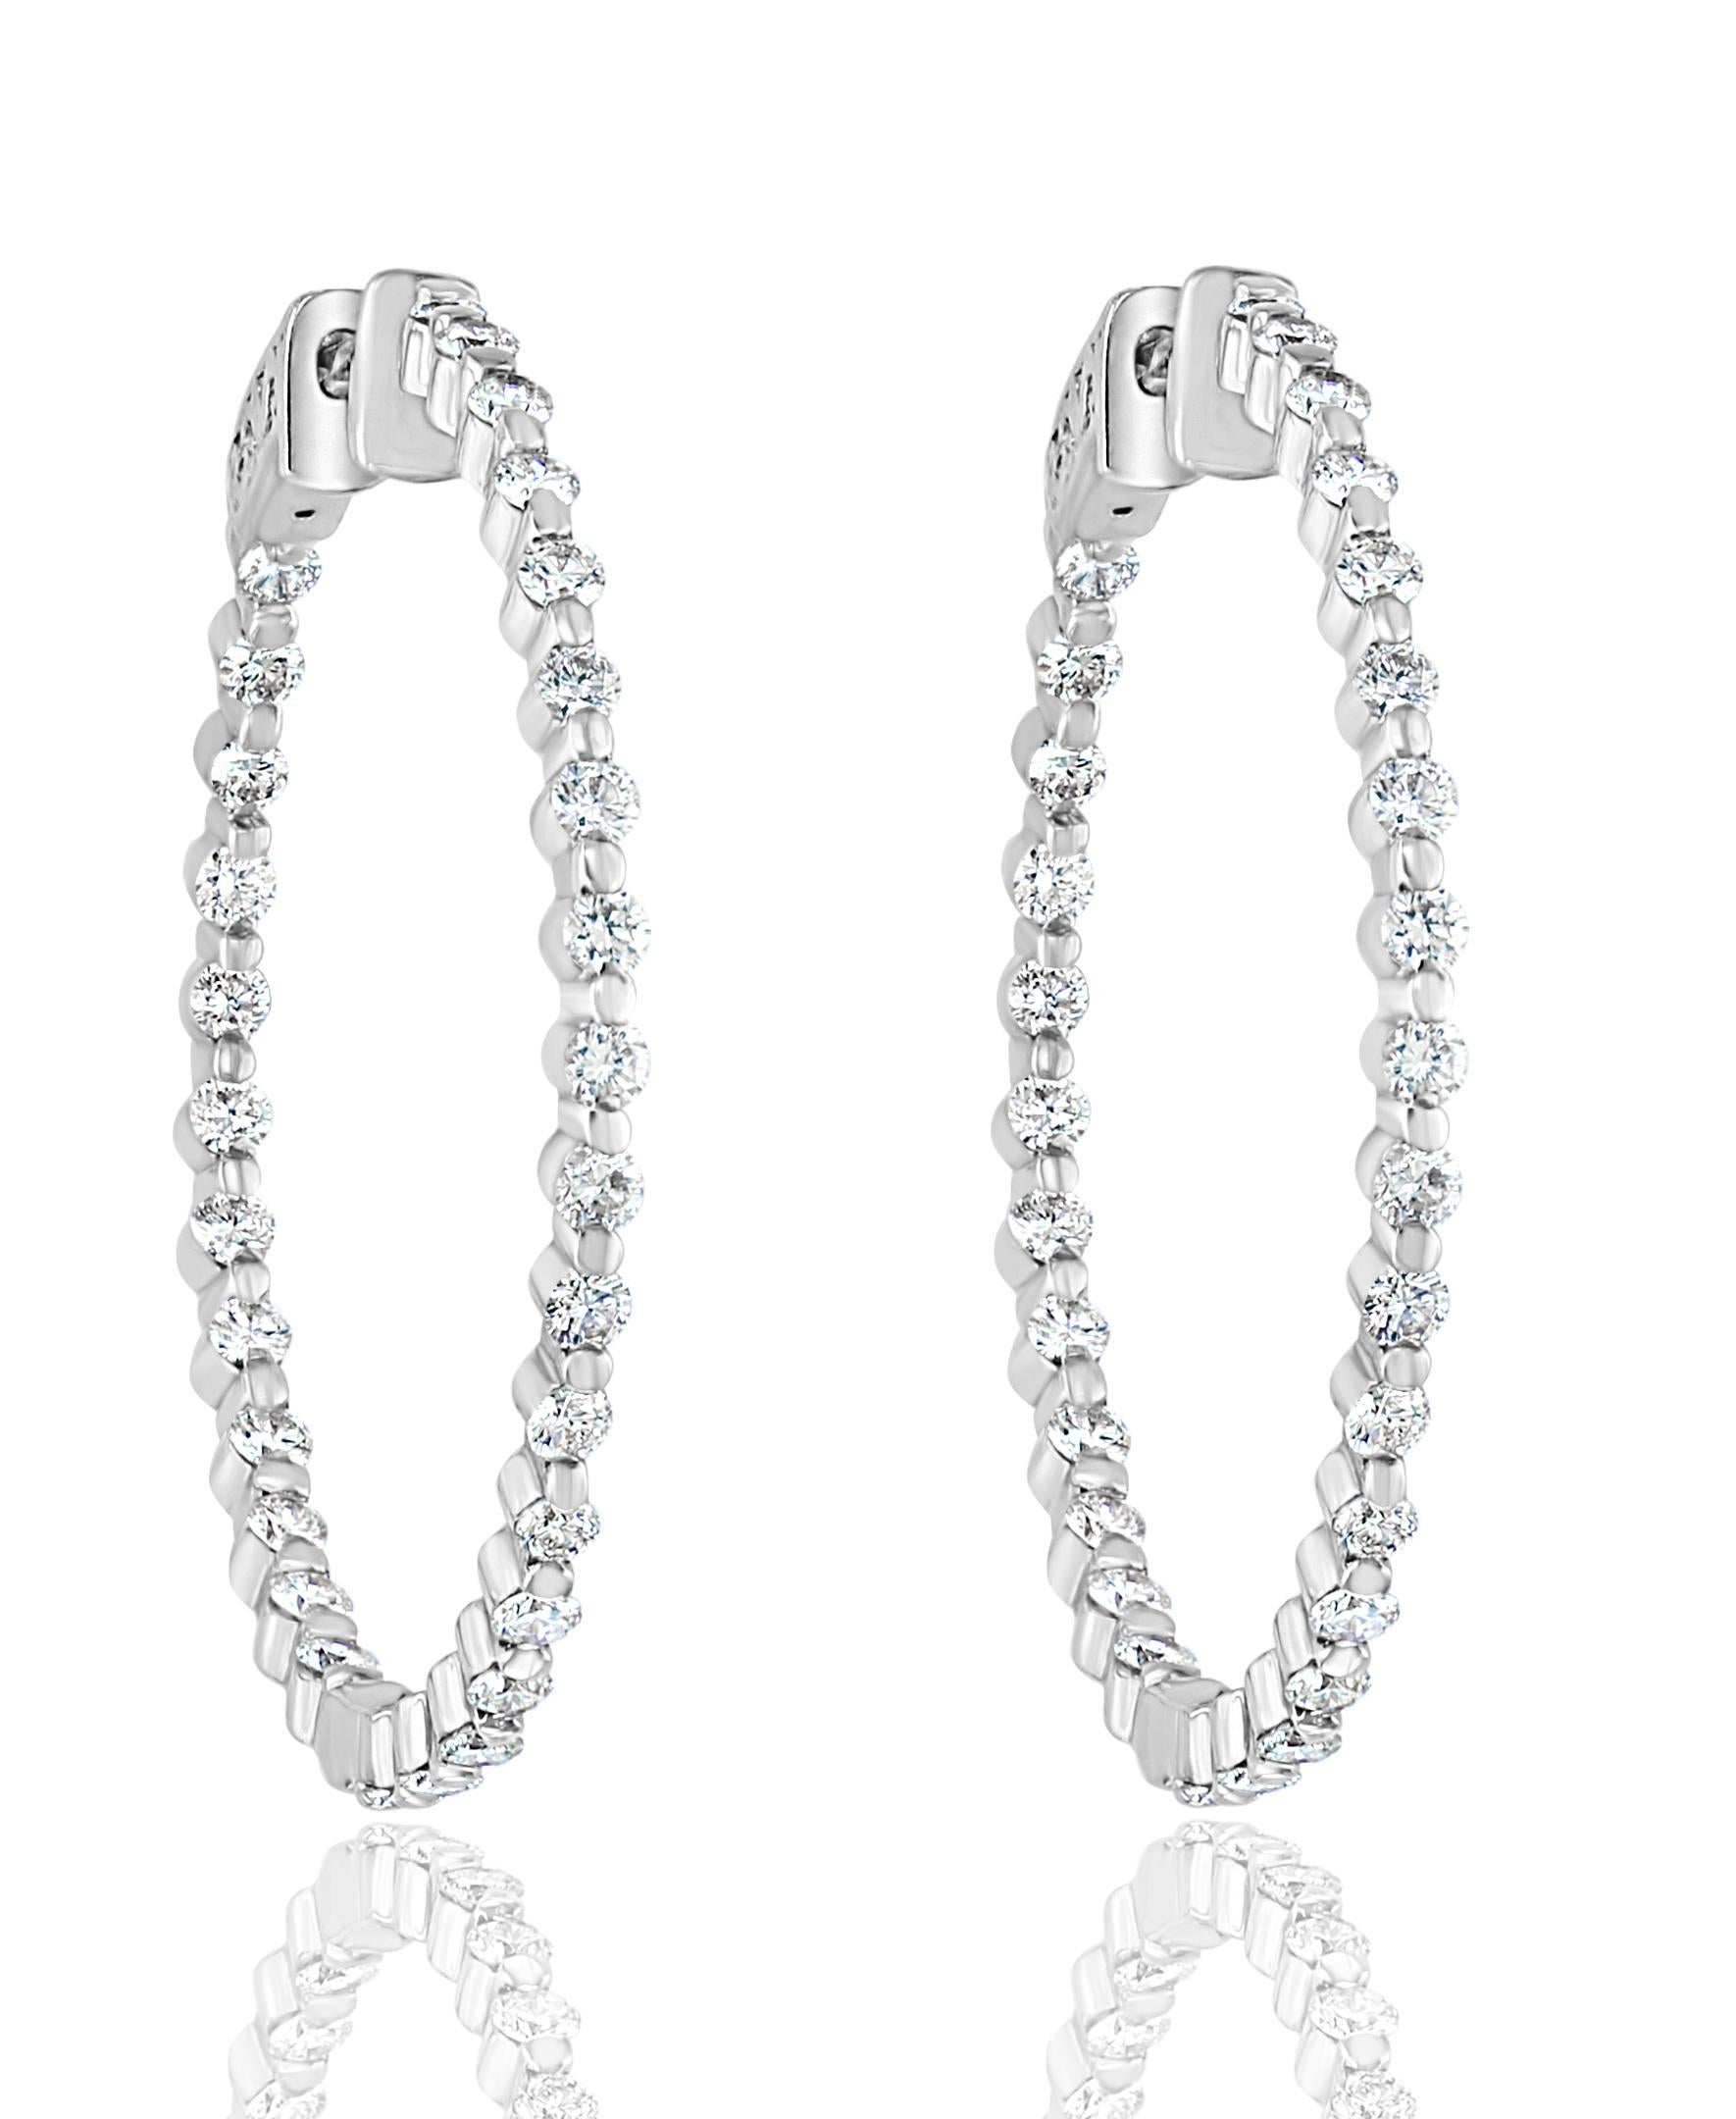 Modern 2.05 Carat Brilliant Cut Round Diamond Hoop Earrings in 14K White Gold For Sale